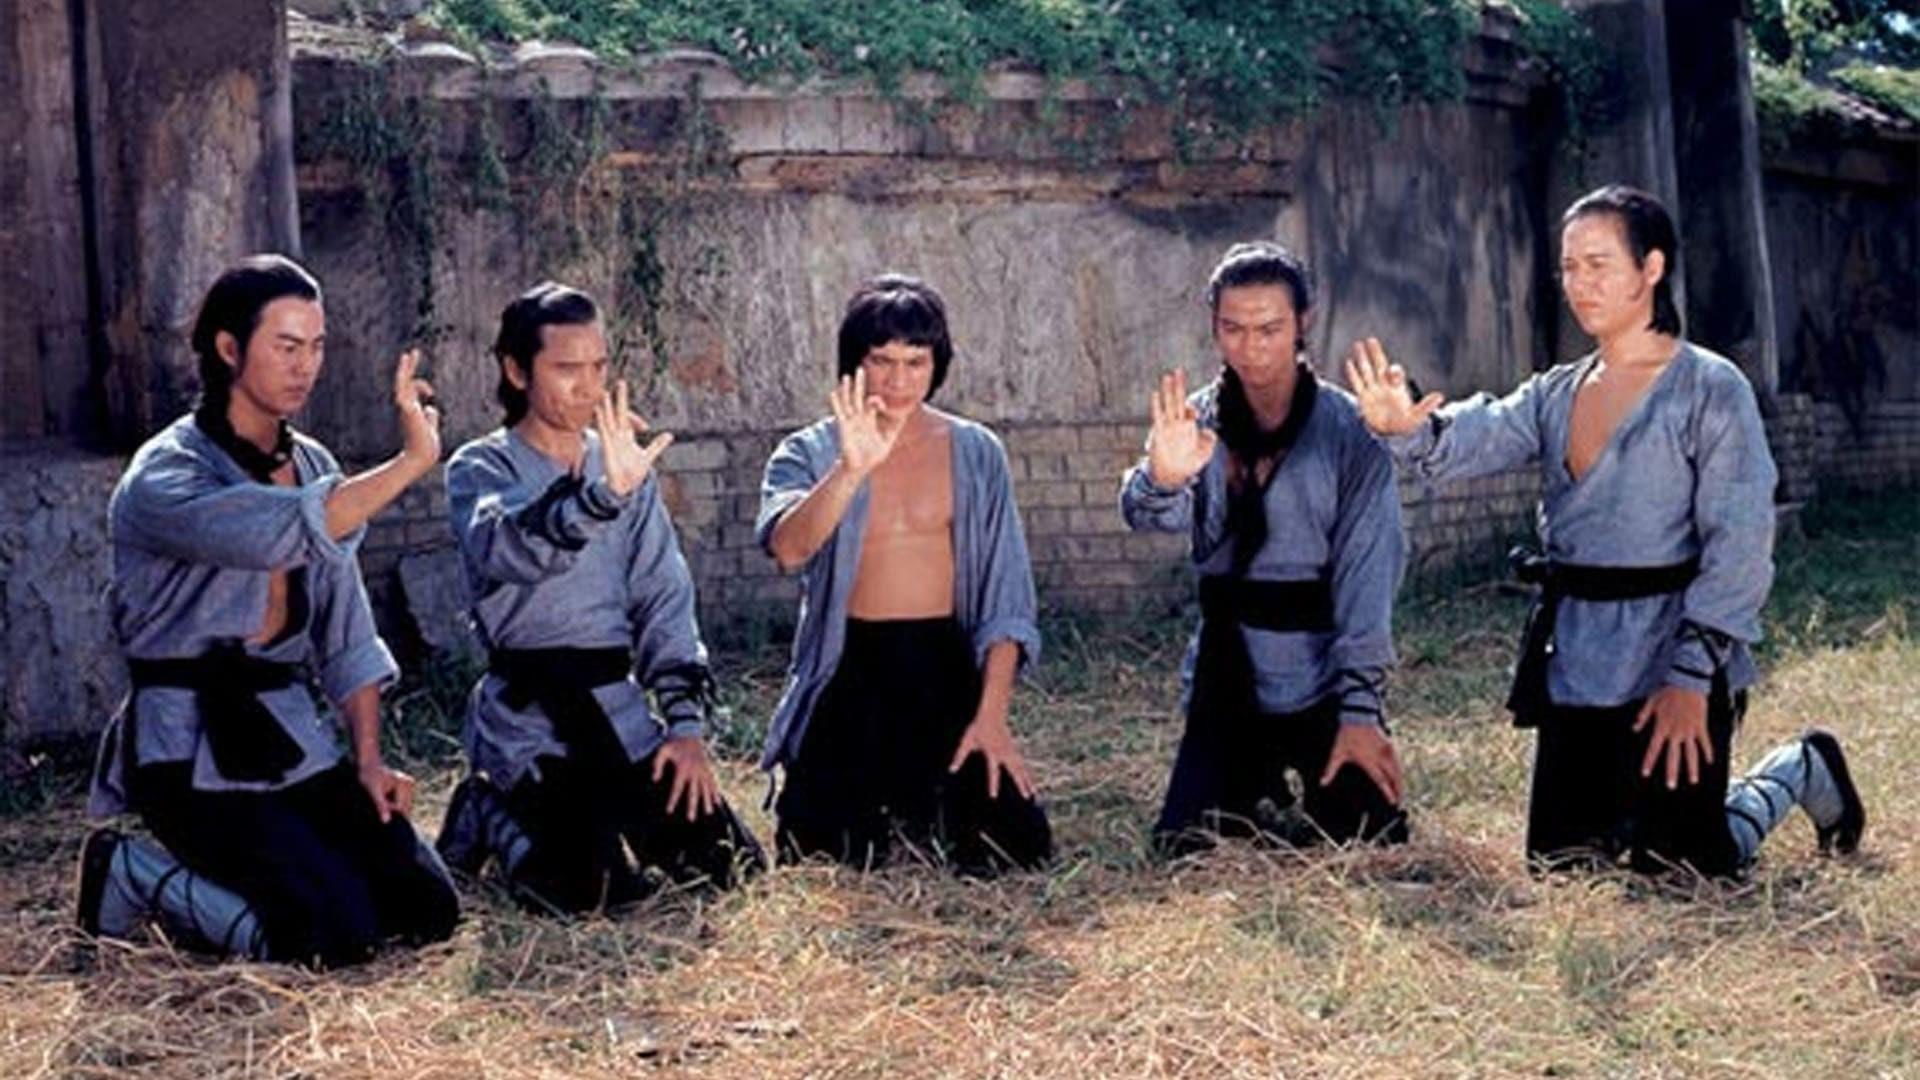 Five Shaolin Masters